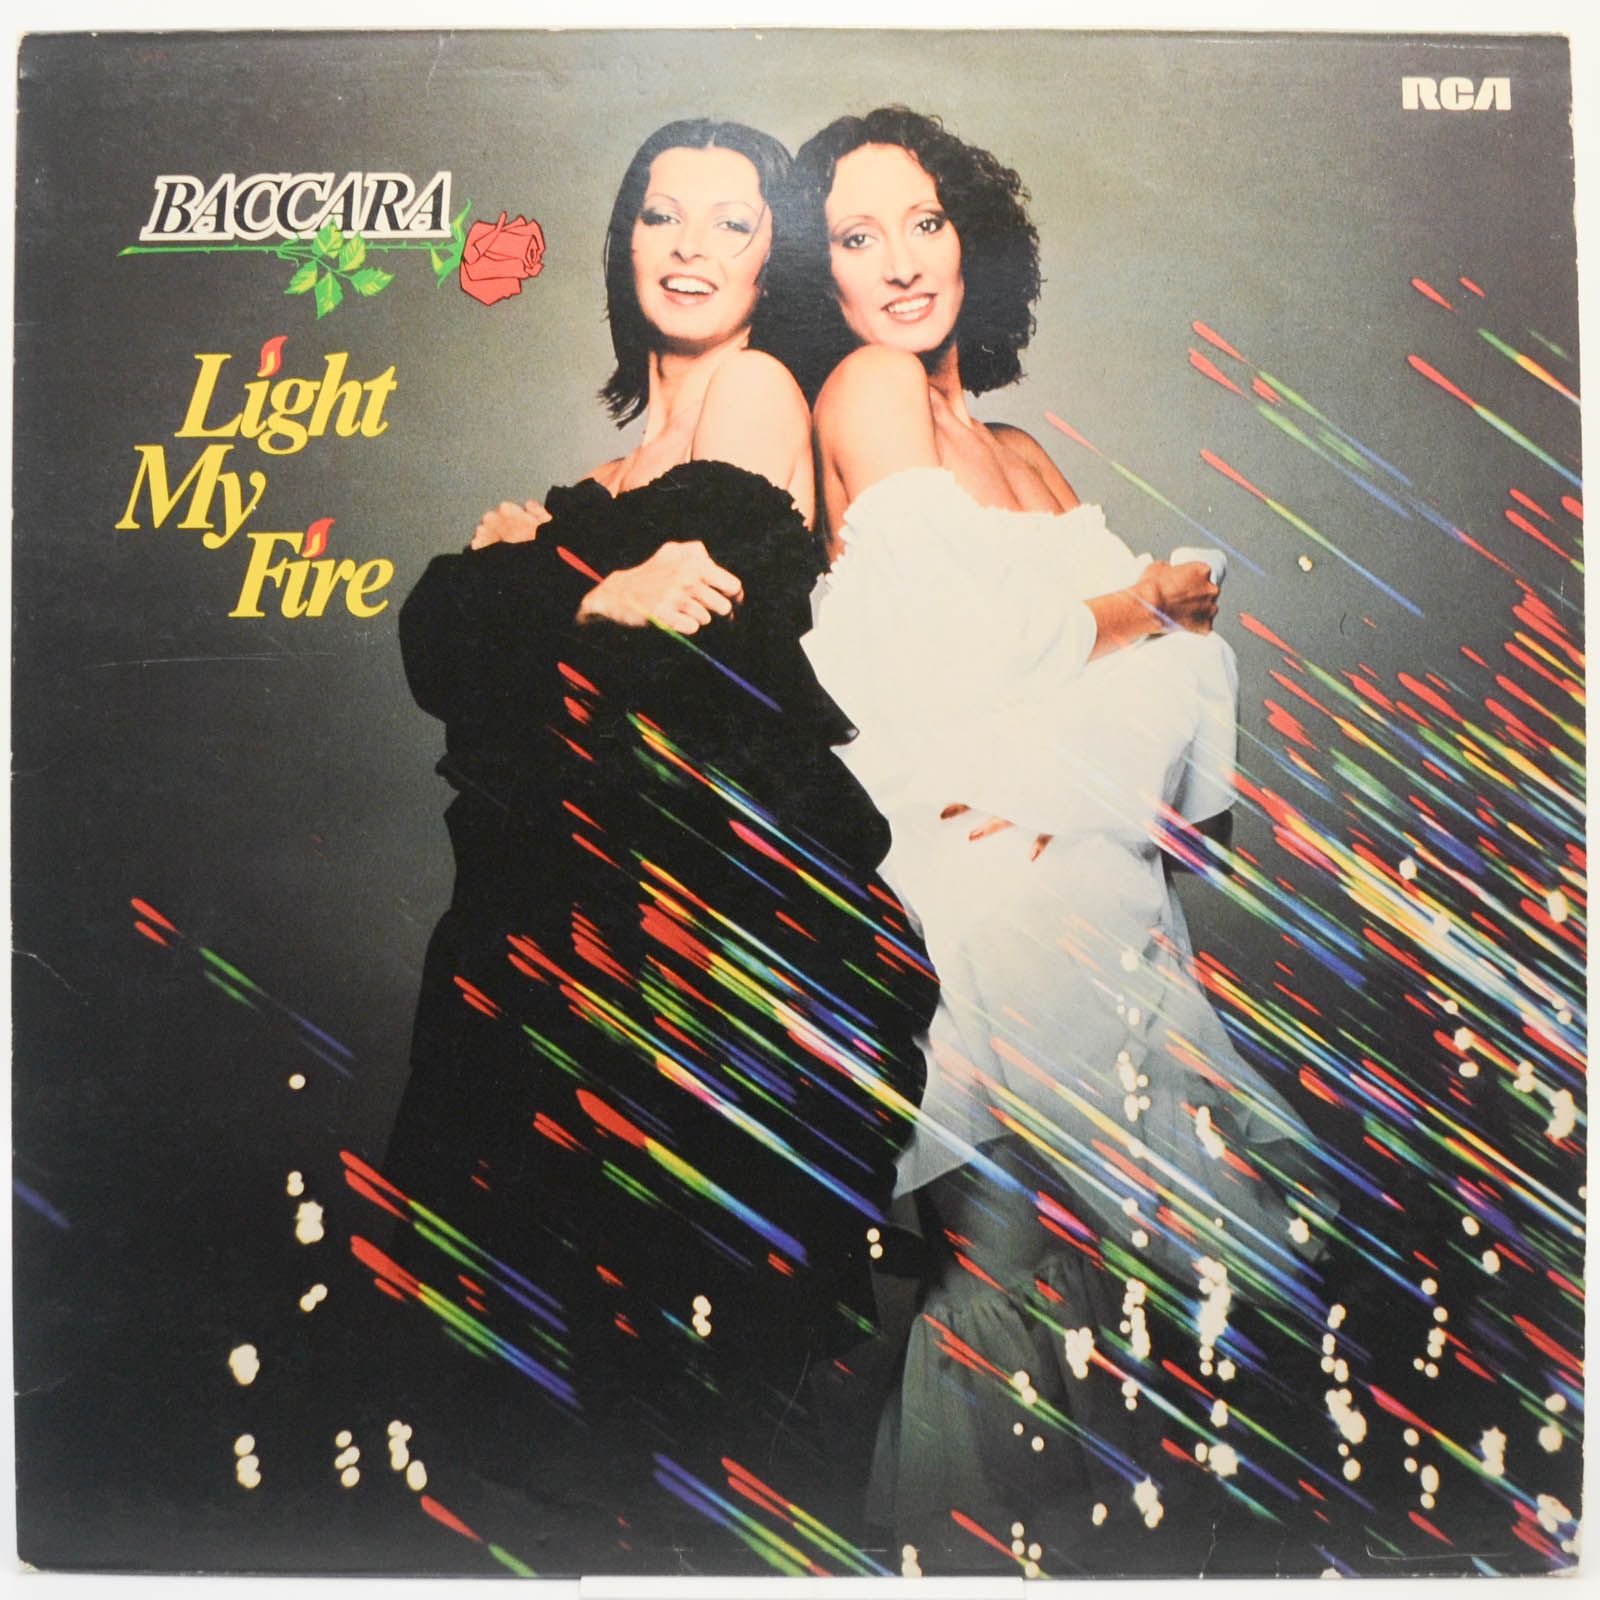 Baccara — Light My Fire, 1978